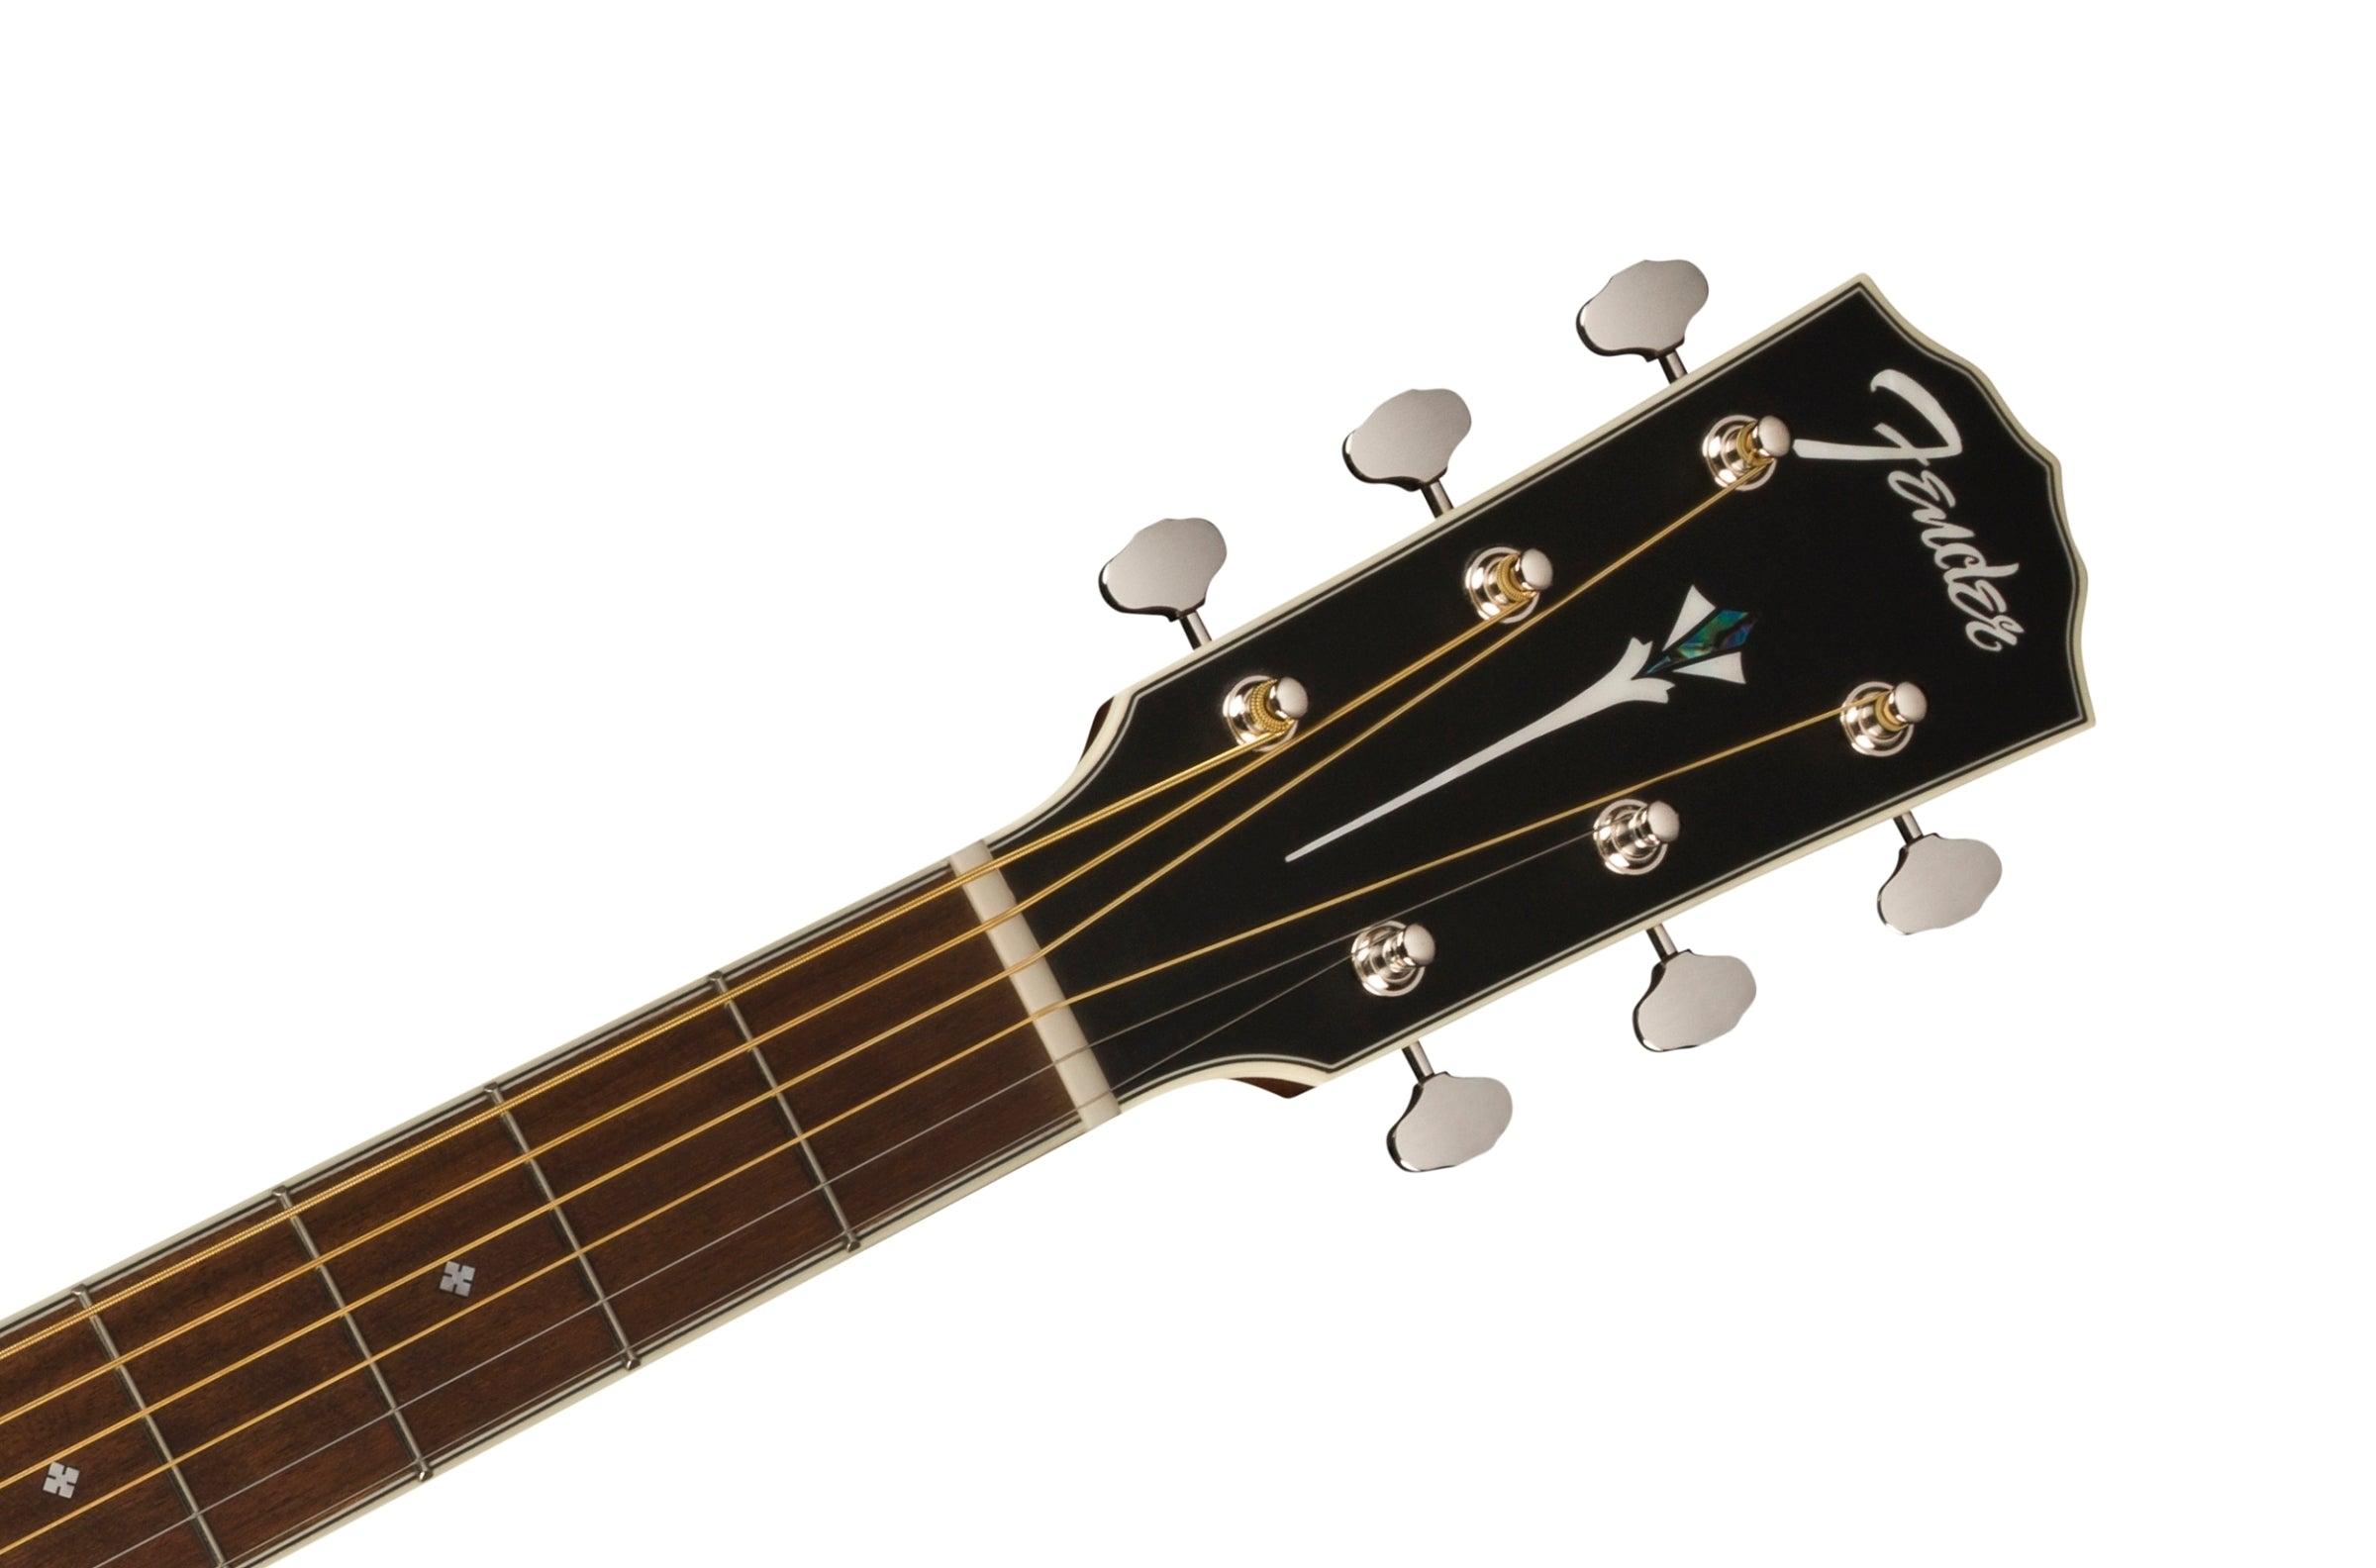 Fender PD-220E All Mahogany Dreadnought Acoustic-Electric Guitar - Aged Cognac Burst